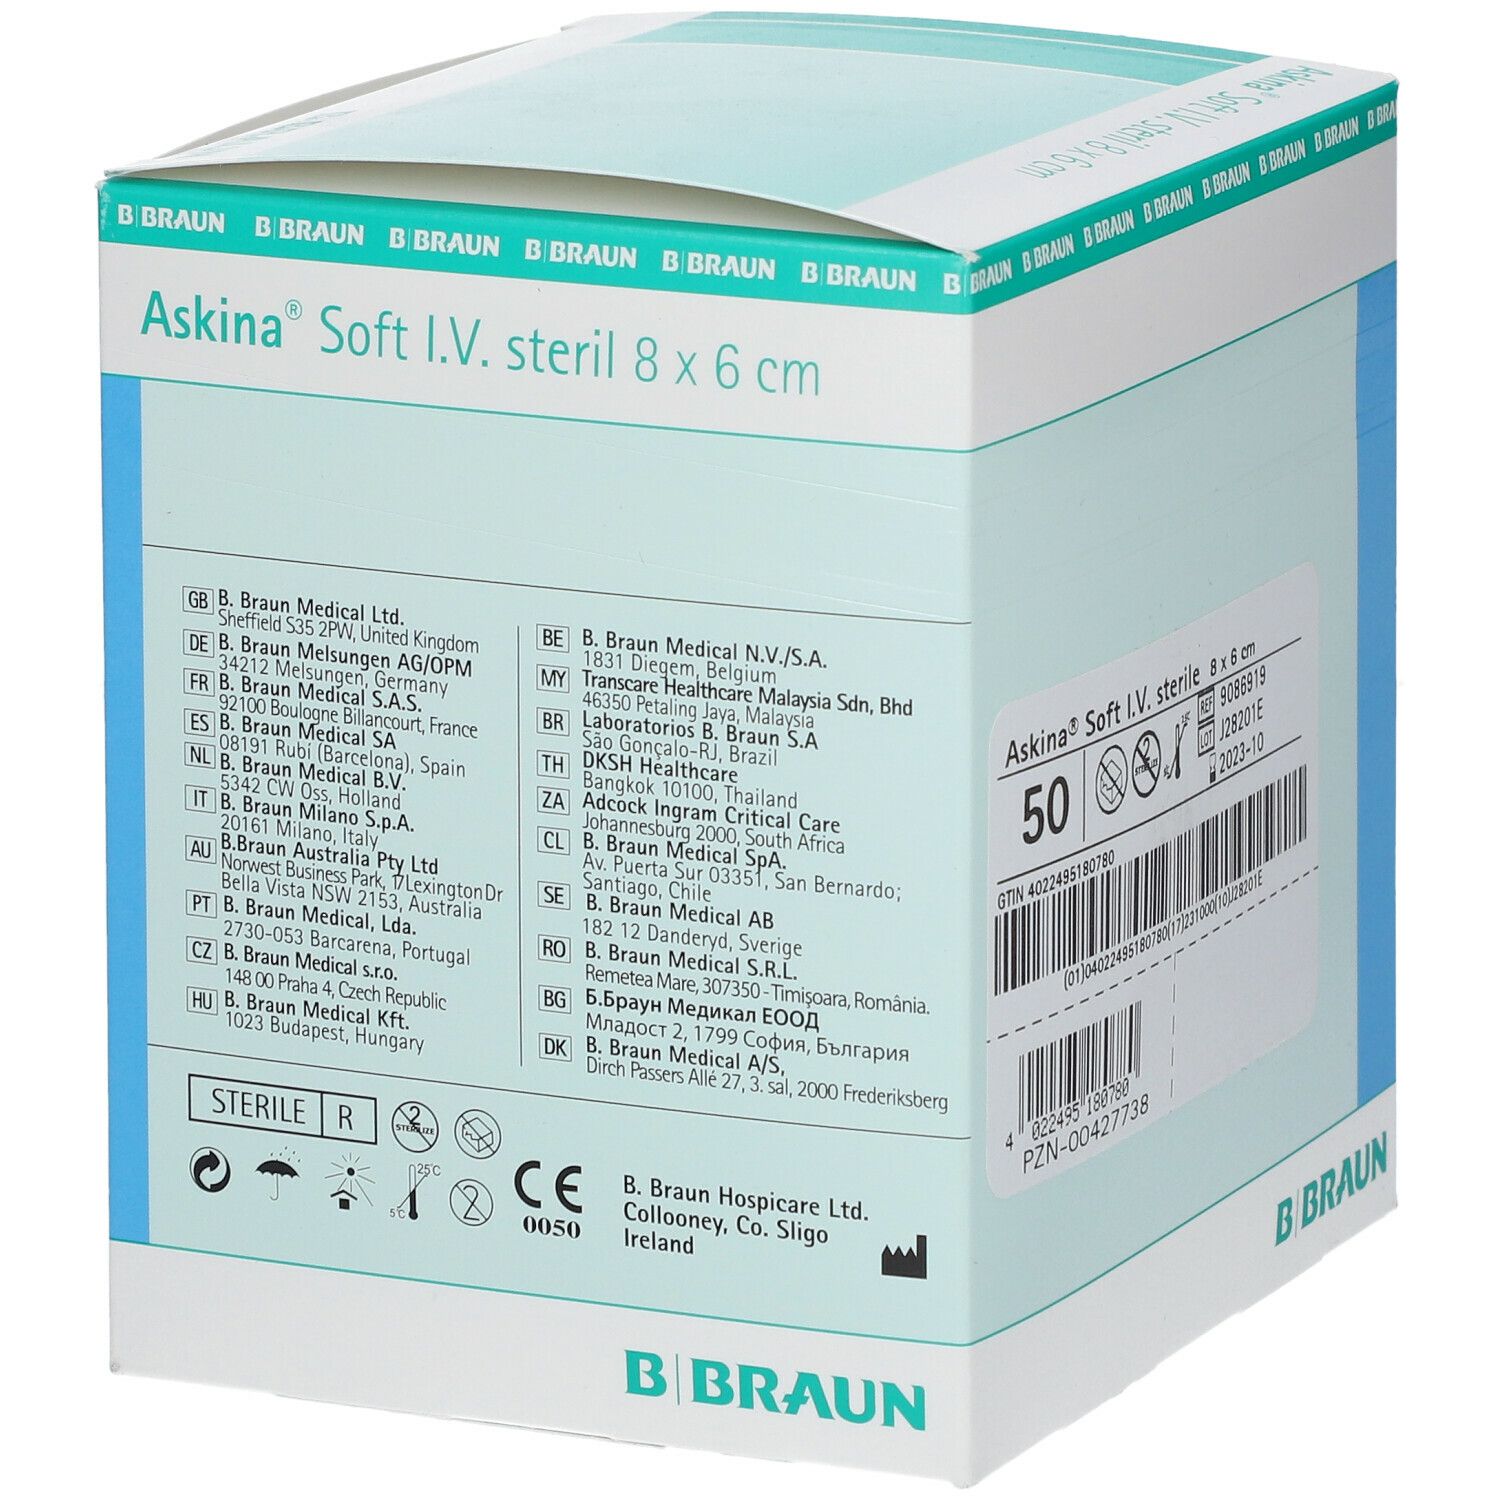 Askina® Soft I.V. steril Wundverband 8 x 6 cm